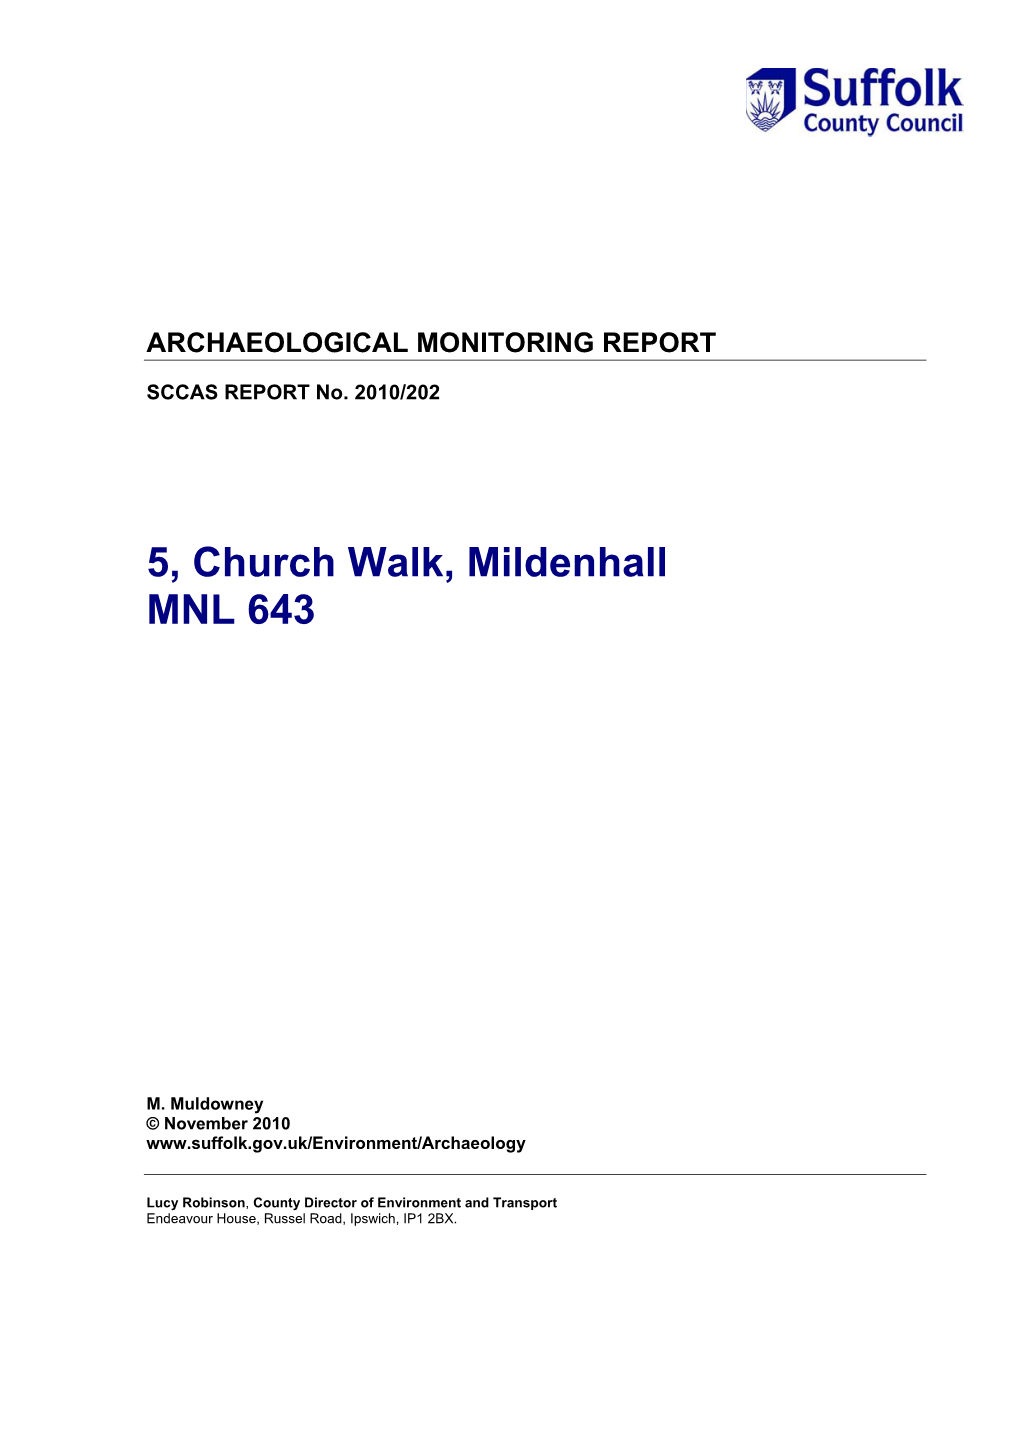 5, Church Walk, Mildenhall MNL 643